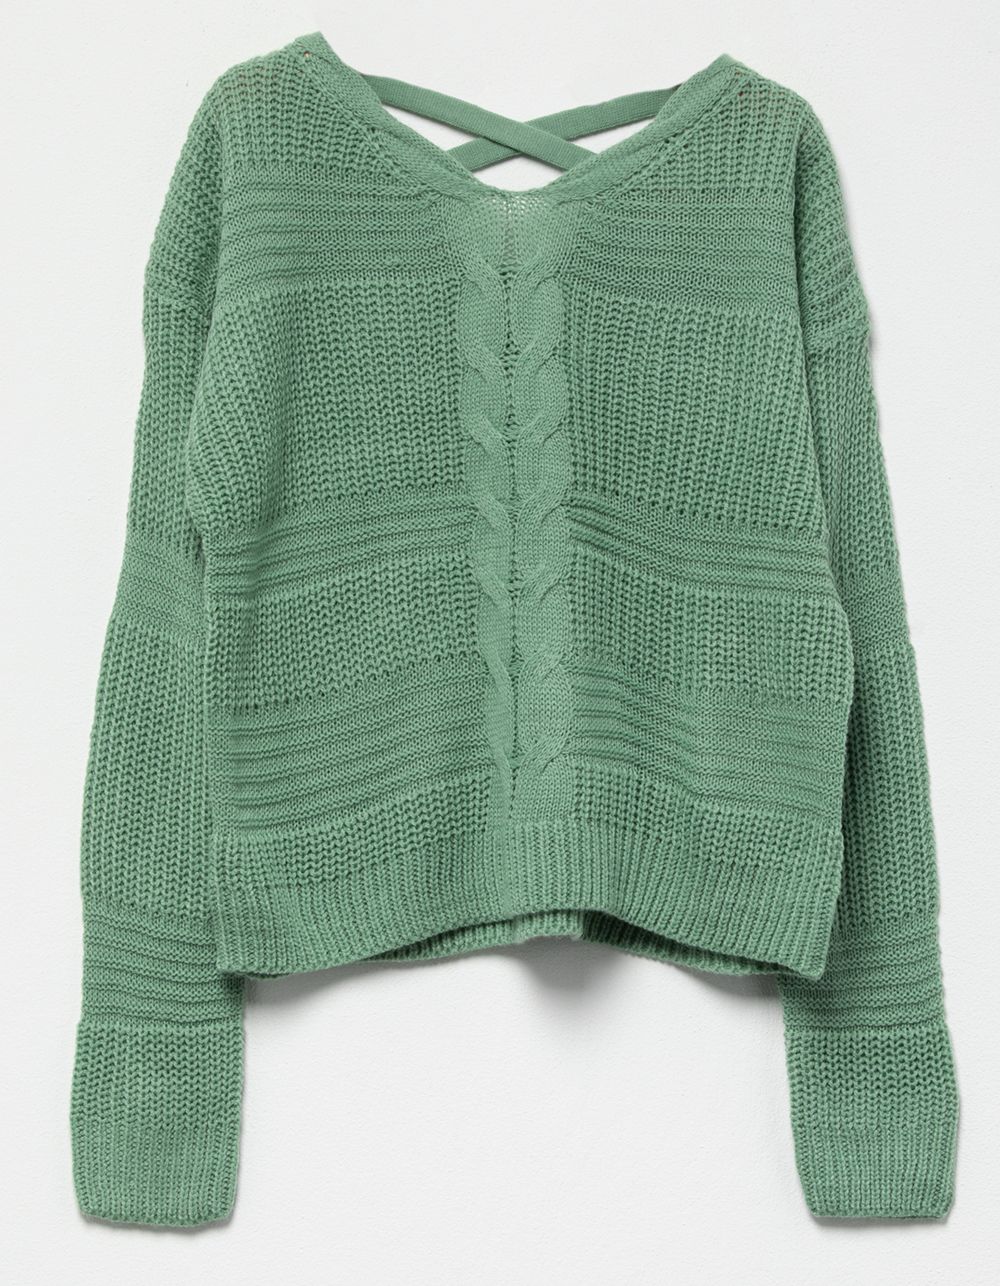 JOLIE & JOY Cable Lace Up Girls Sweater - GREEN | Tillys | Tillys